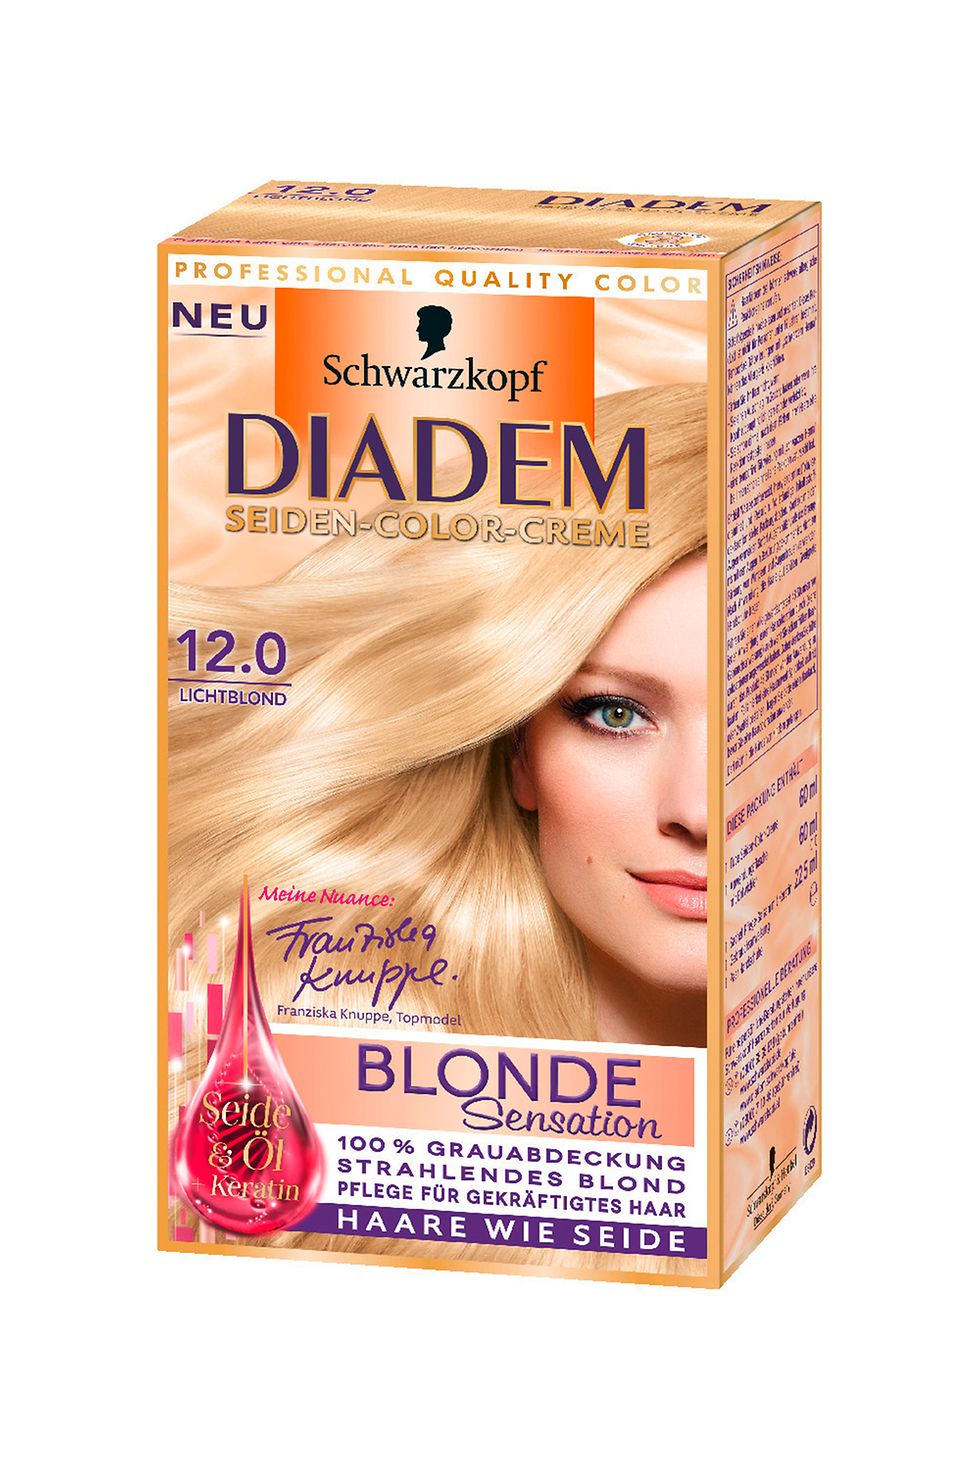 Diadem Seiden-Color-Creme Blonde Sensation 12.0 Lichtblond